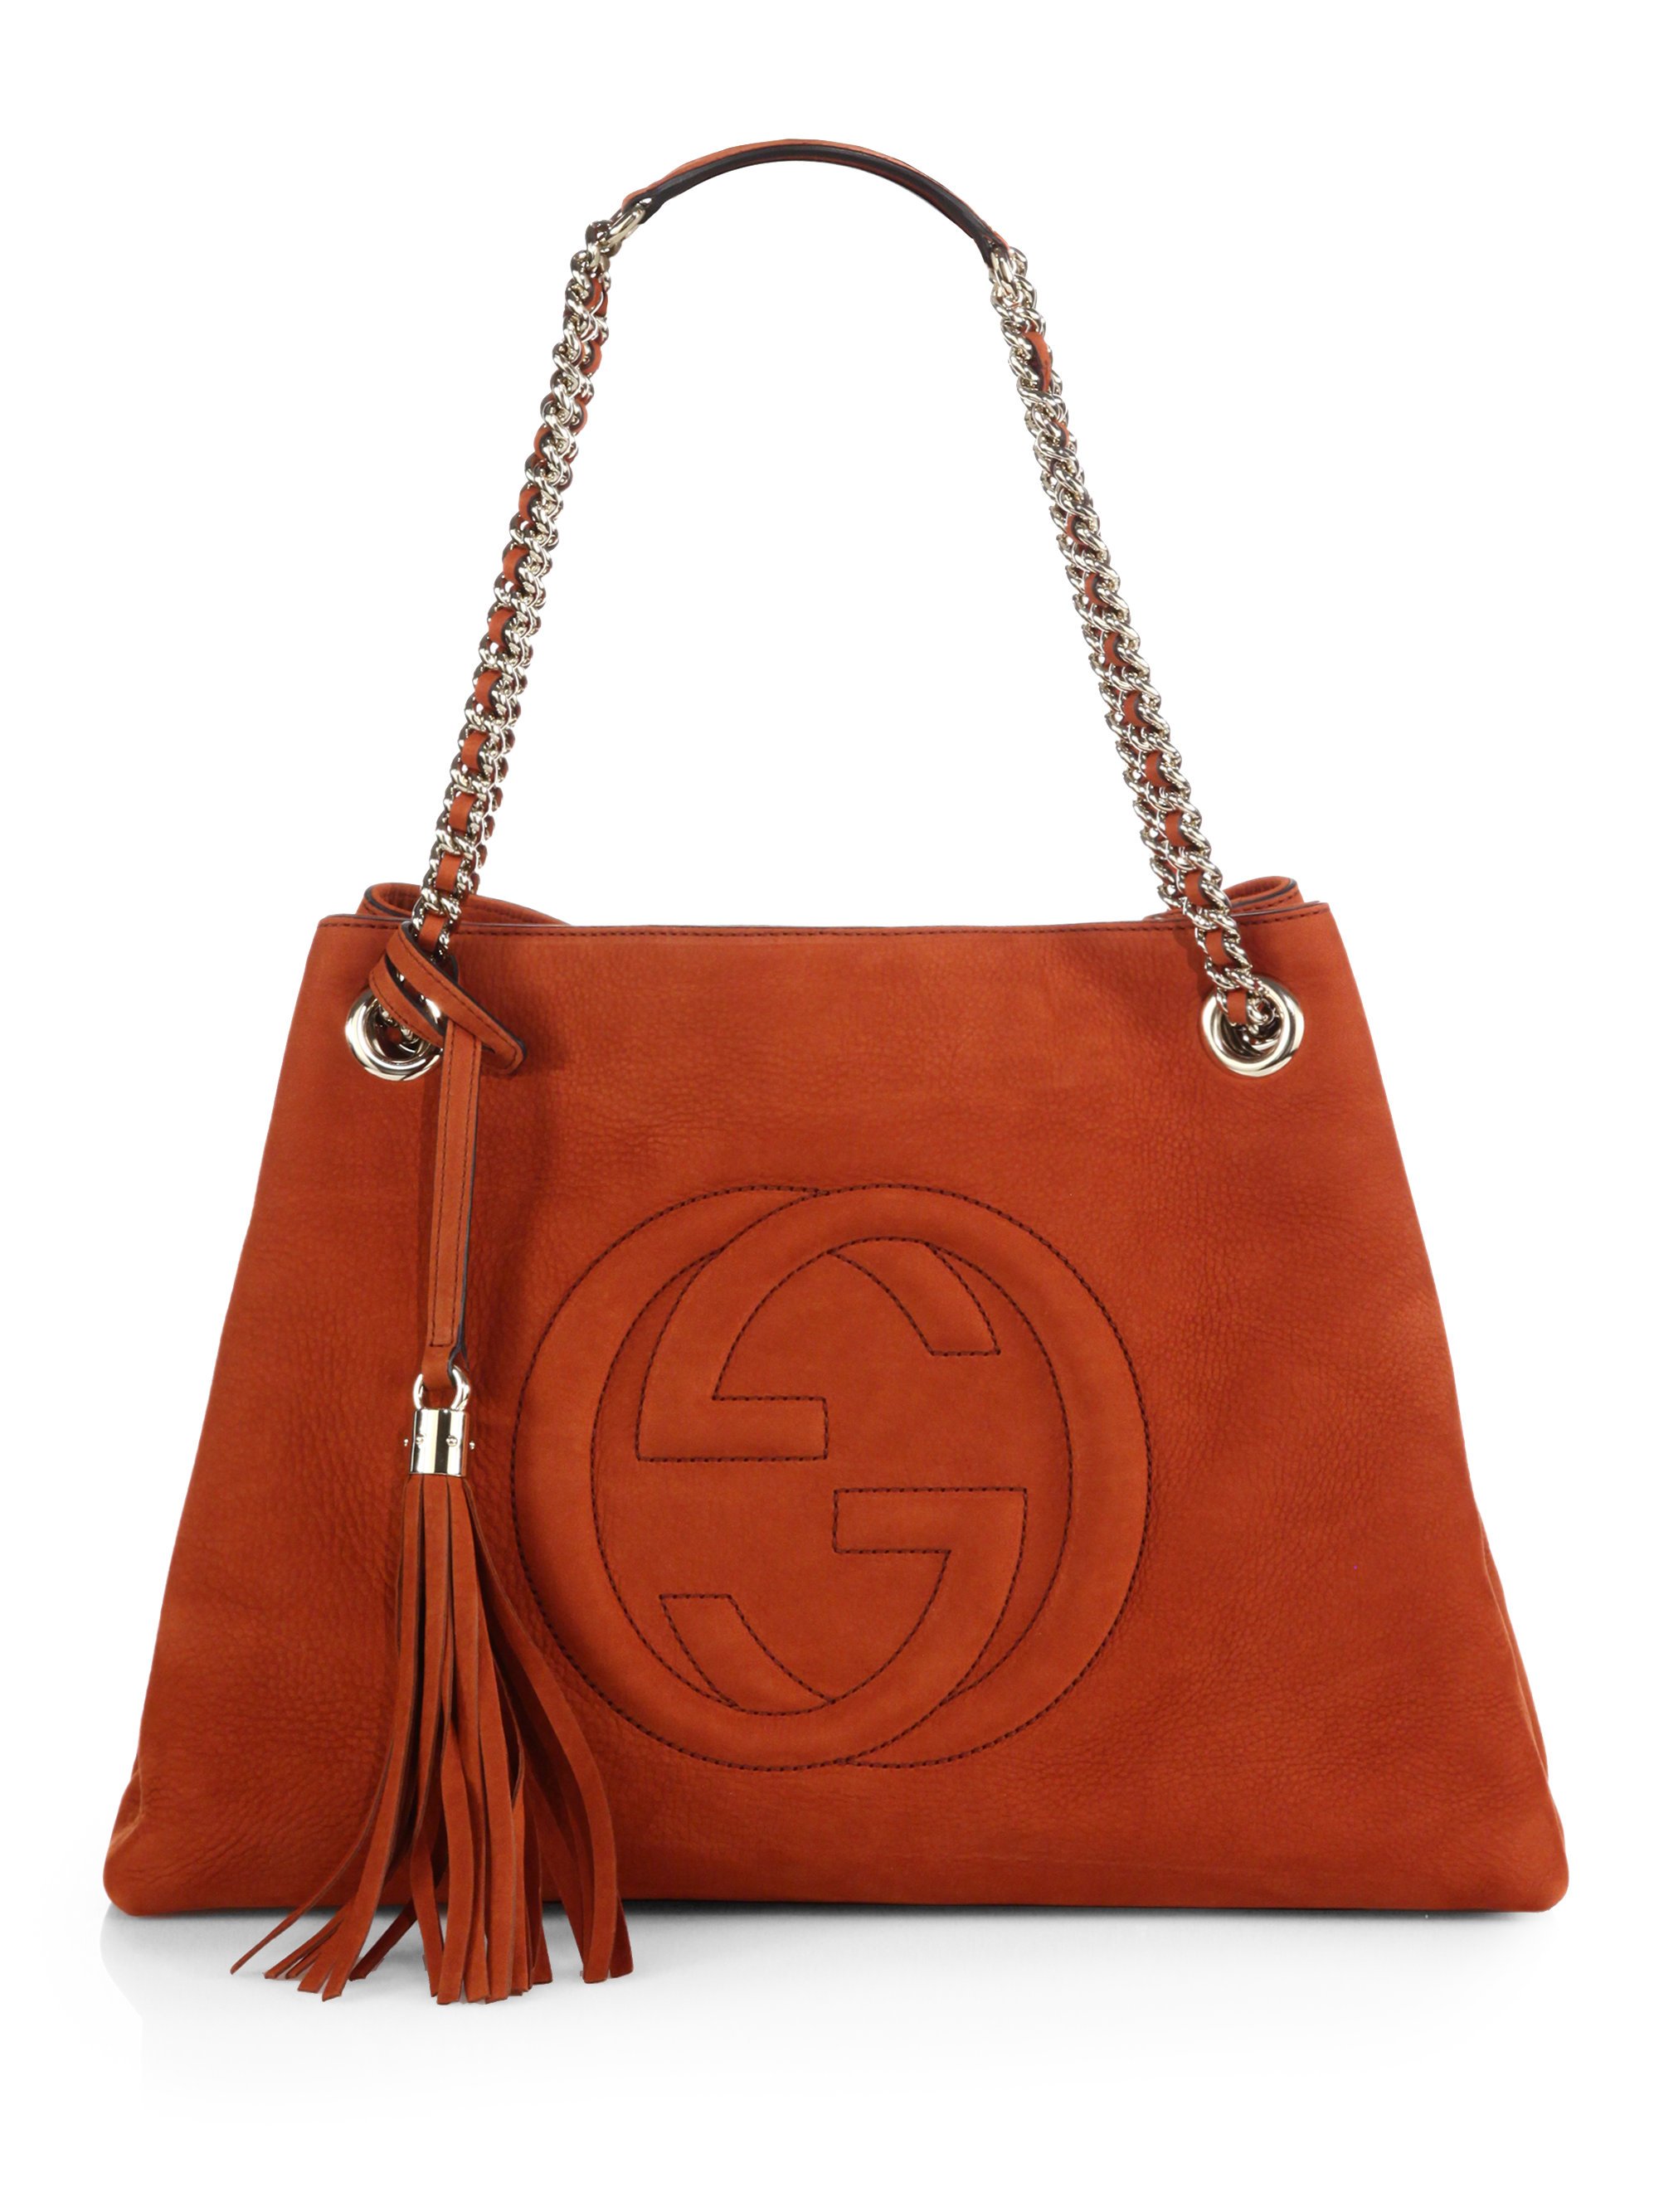 Gucci Soho Suede Shoulder Bag in Brown - Lyst